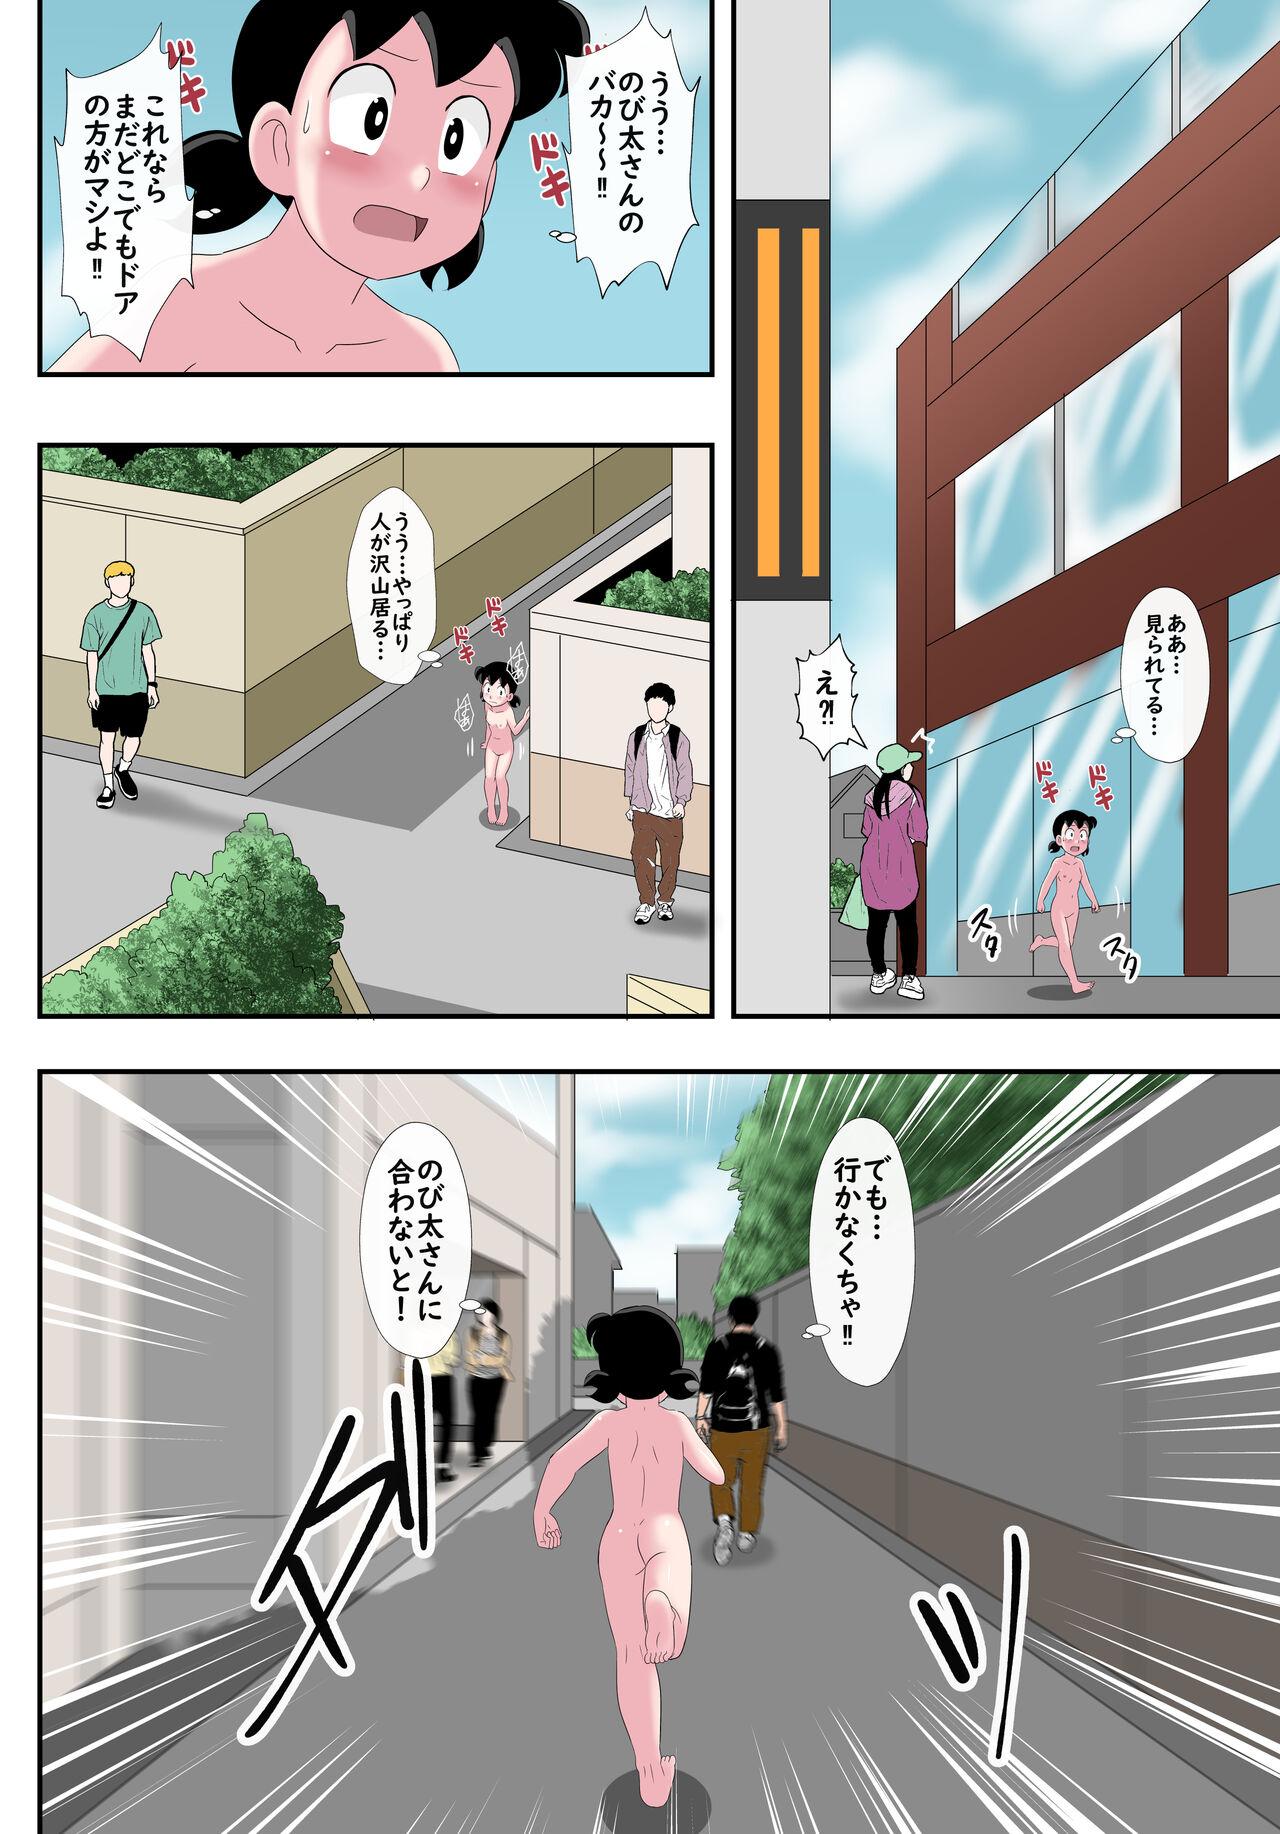 [Circle Takaya] if -sizuka- 7 (Doraemon) 16